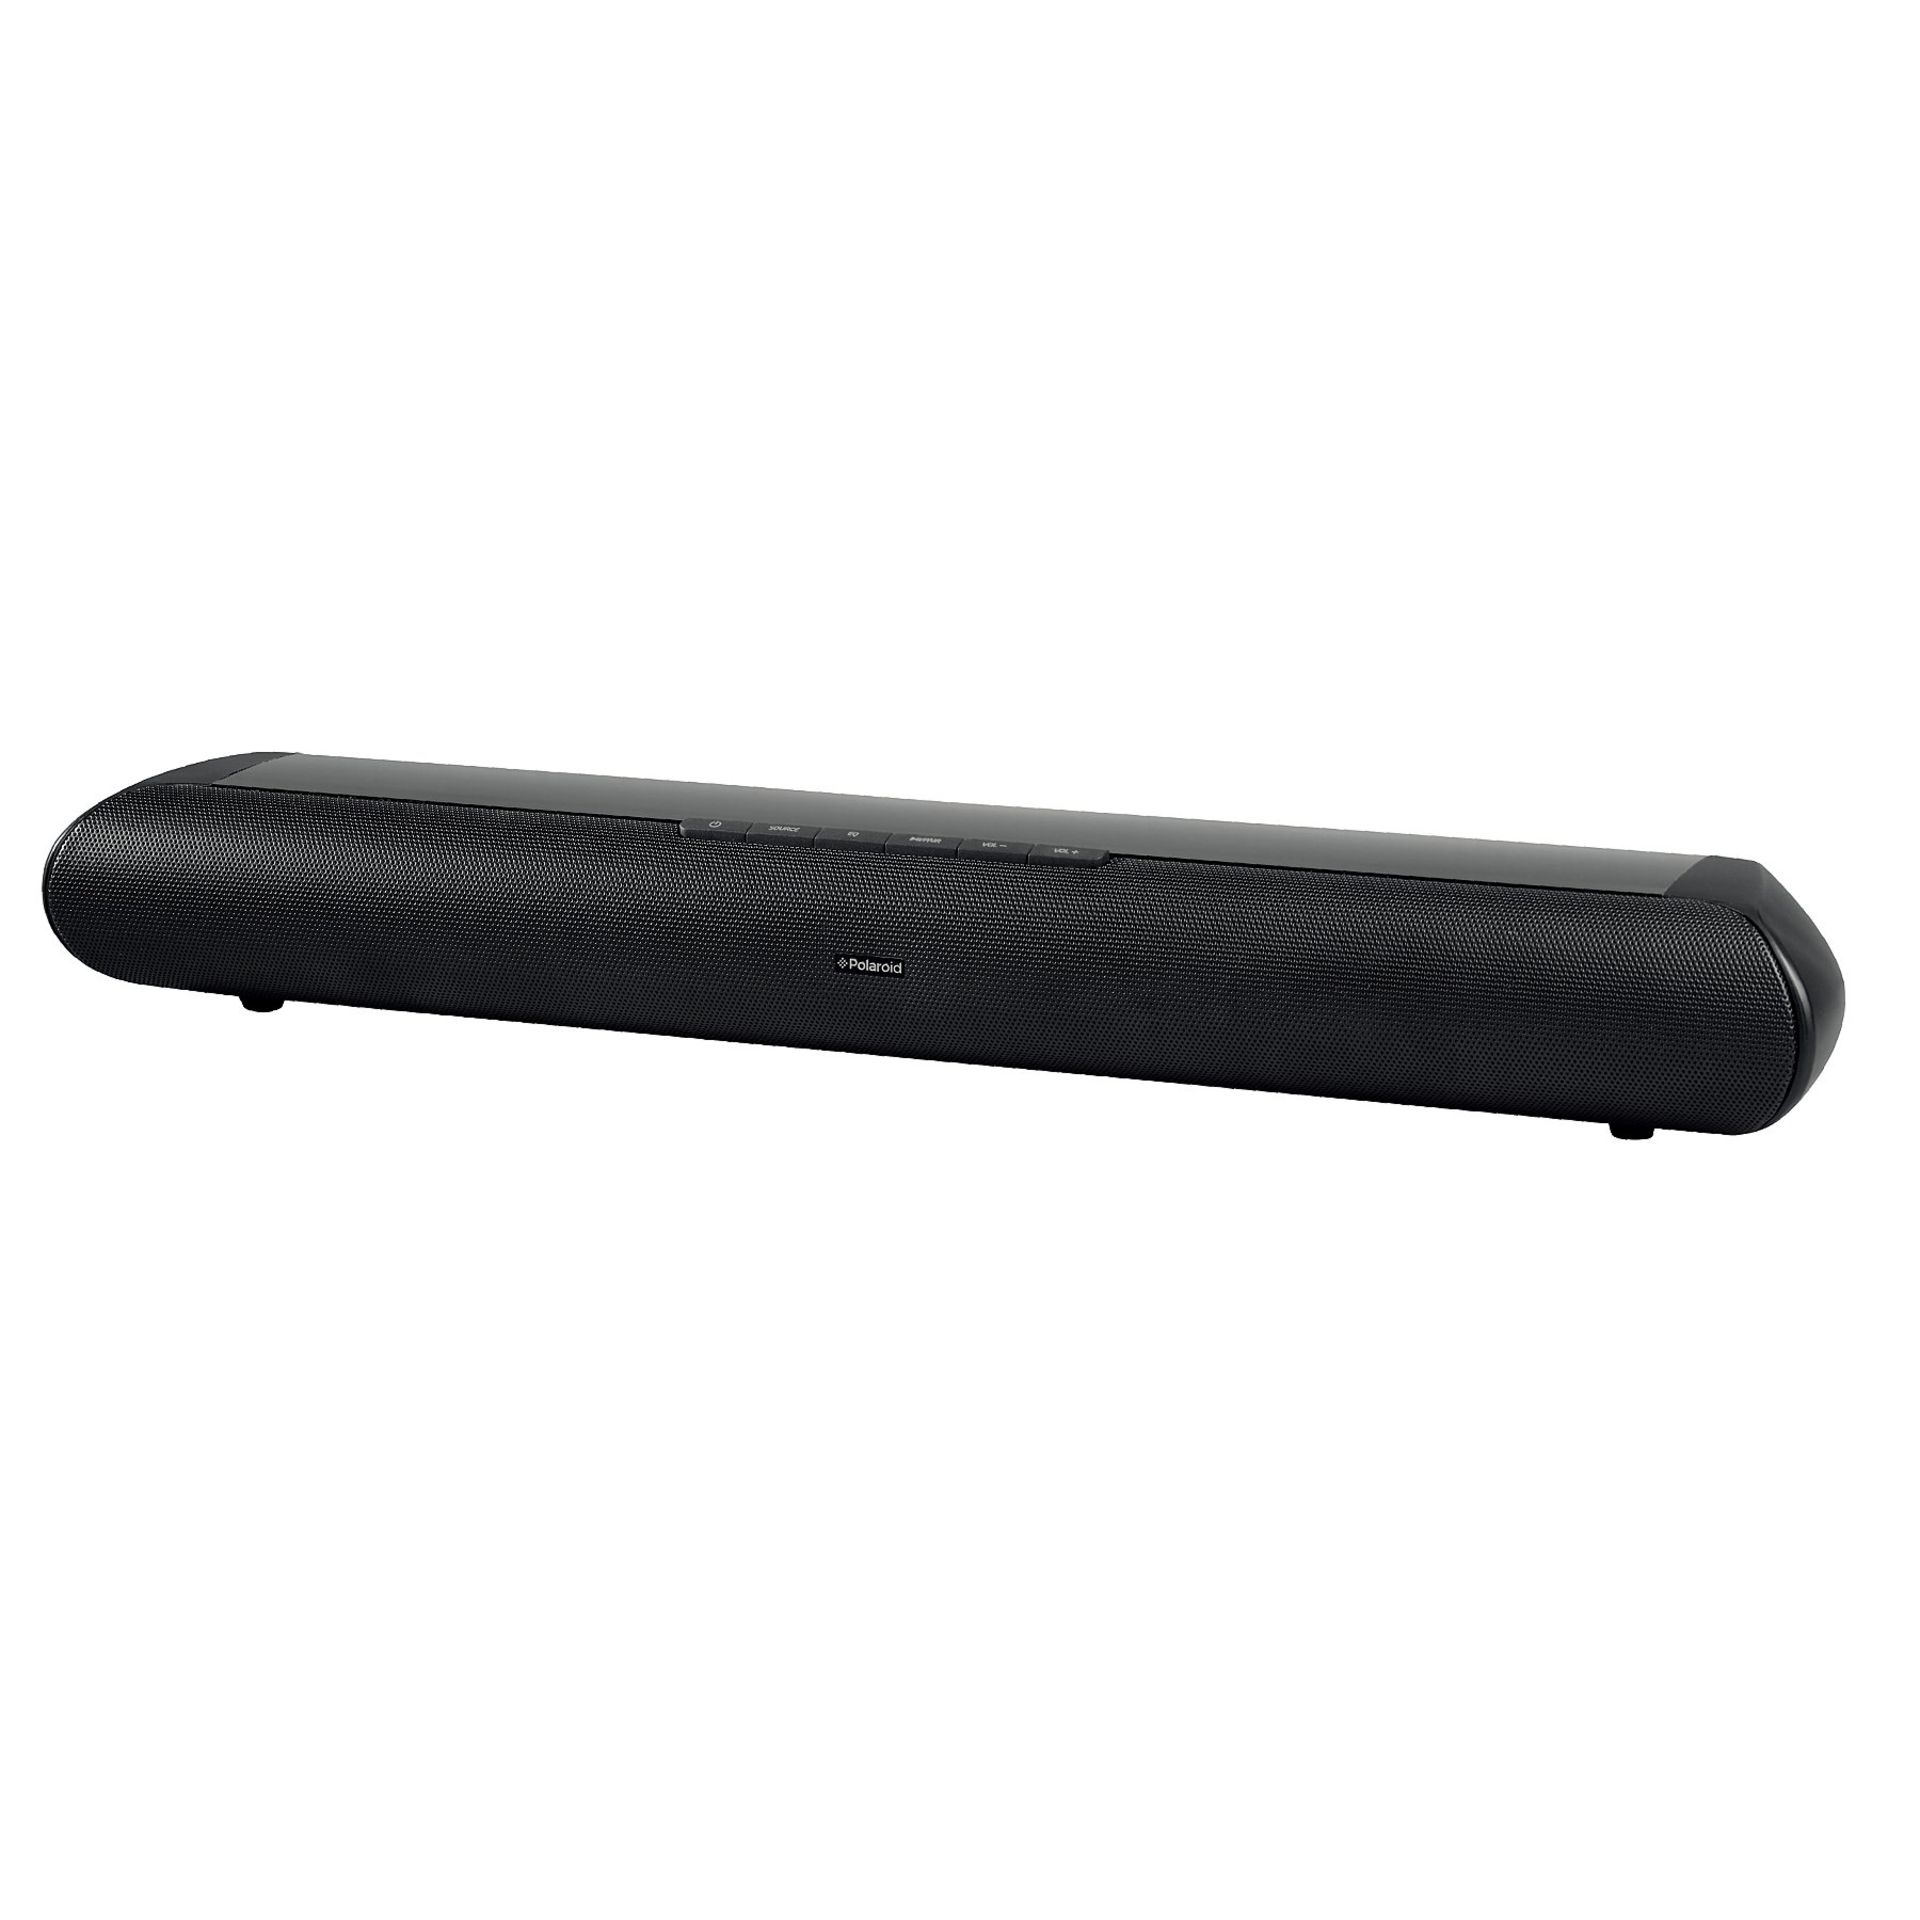 V Grade A/B Poloroid 30w 2.0Ch Bluetooth Soundbar - Optical Input - 3.5mm Audio Input Jack - USB